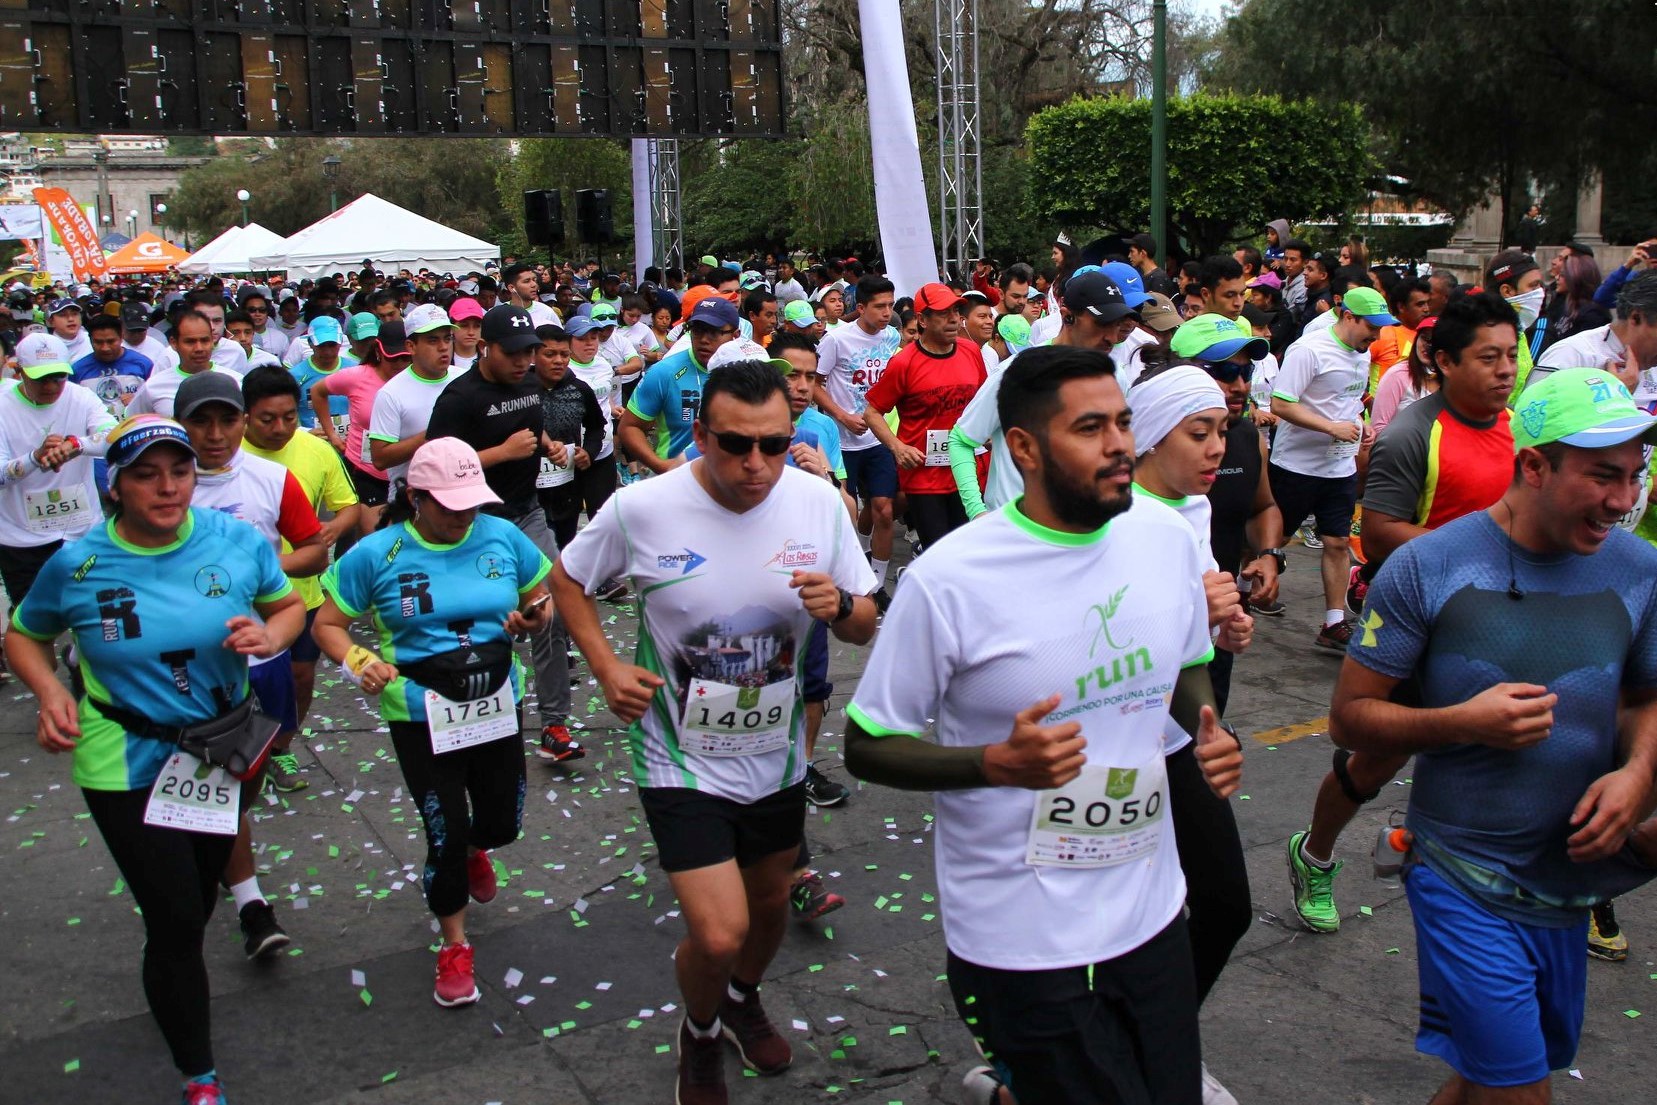 Organizadores esperan unos 2 mil corredores inscritos. (Foto Prensa Libre: Raúl Juárez)